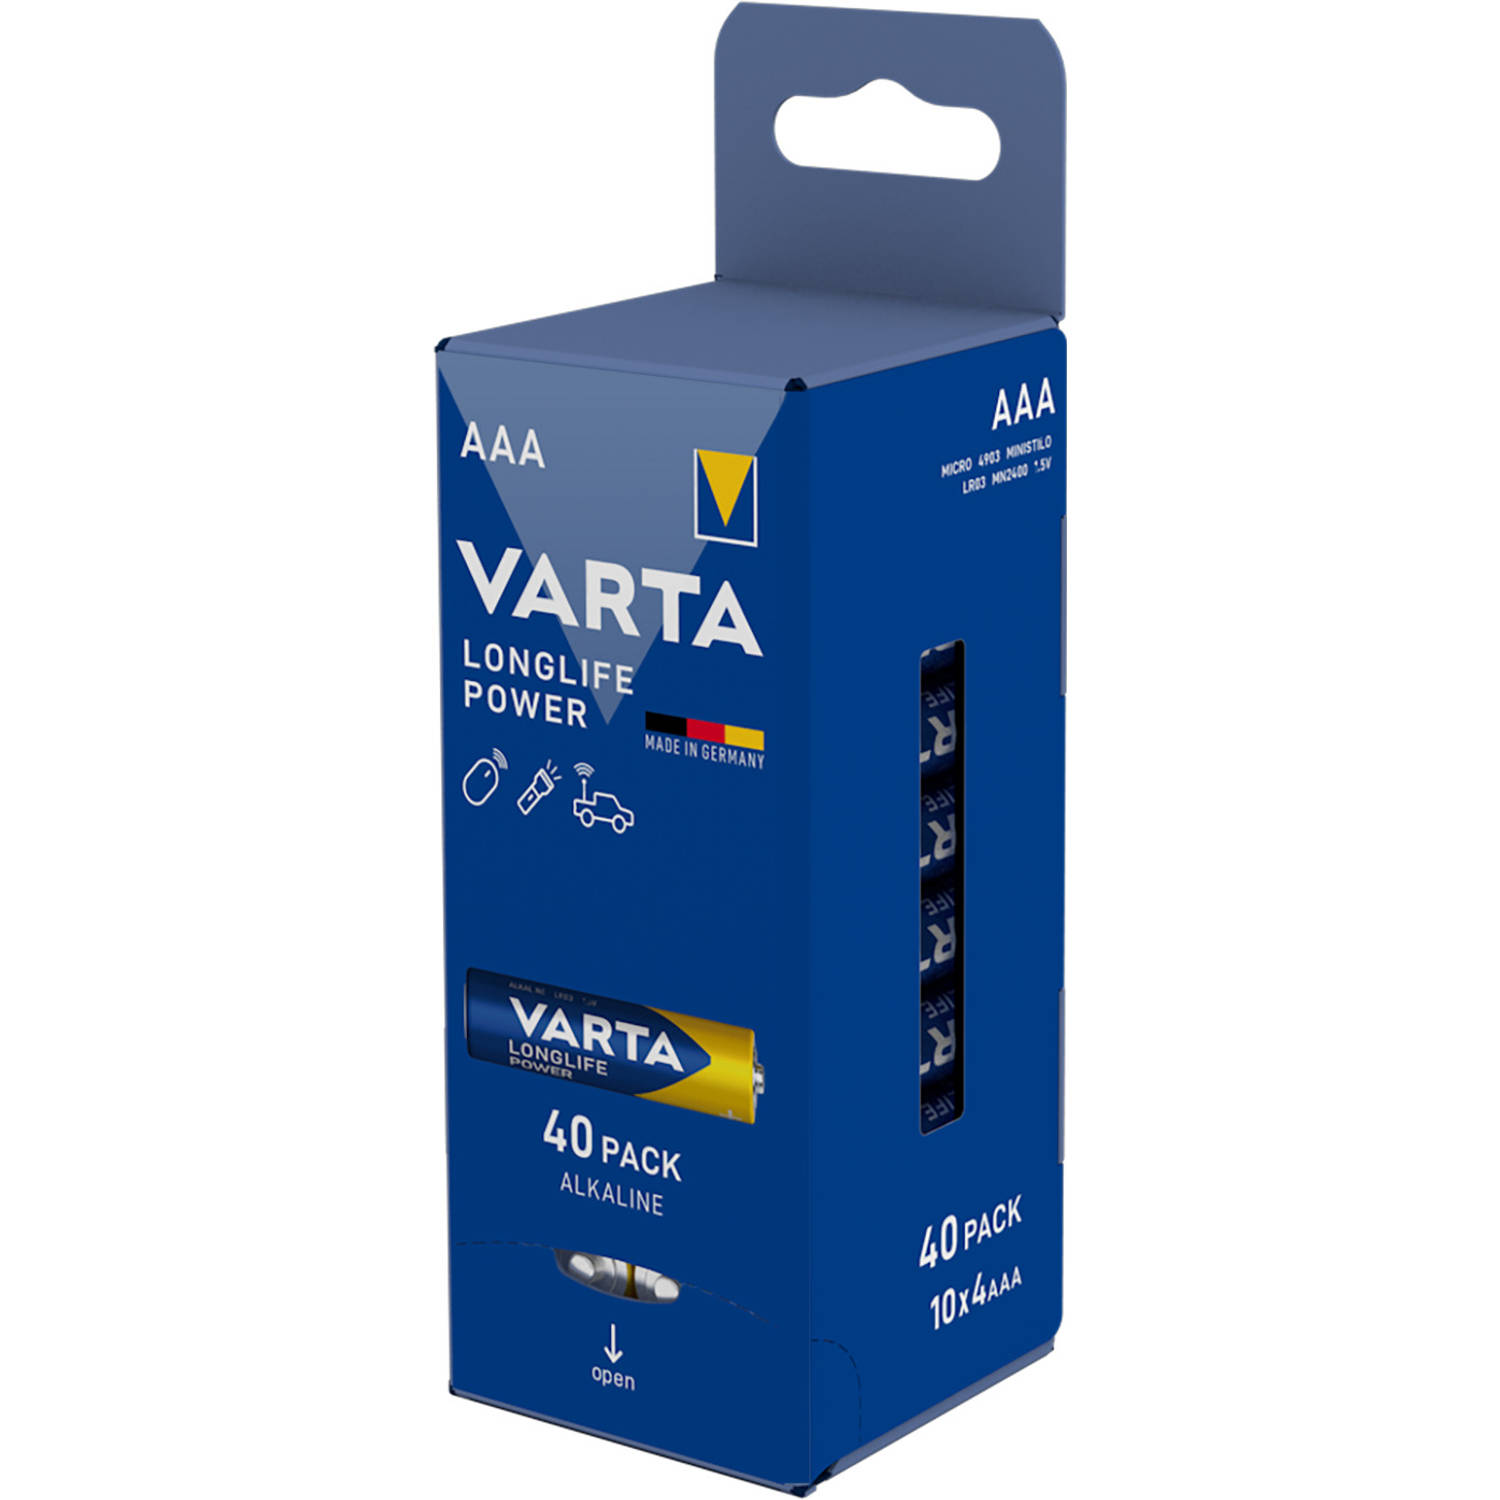 VARTA Longlife Power AAA 40-pack